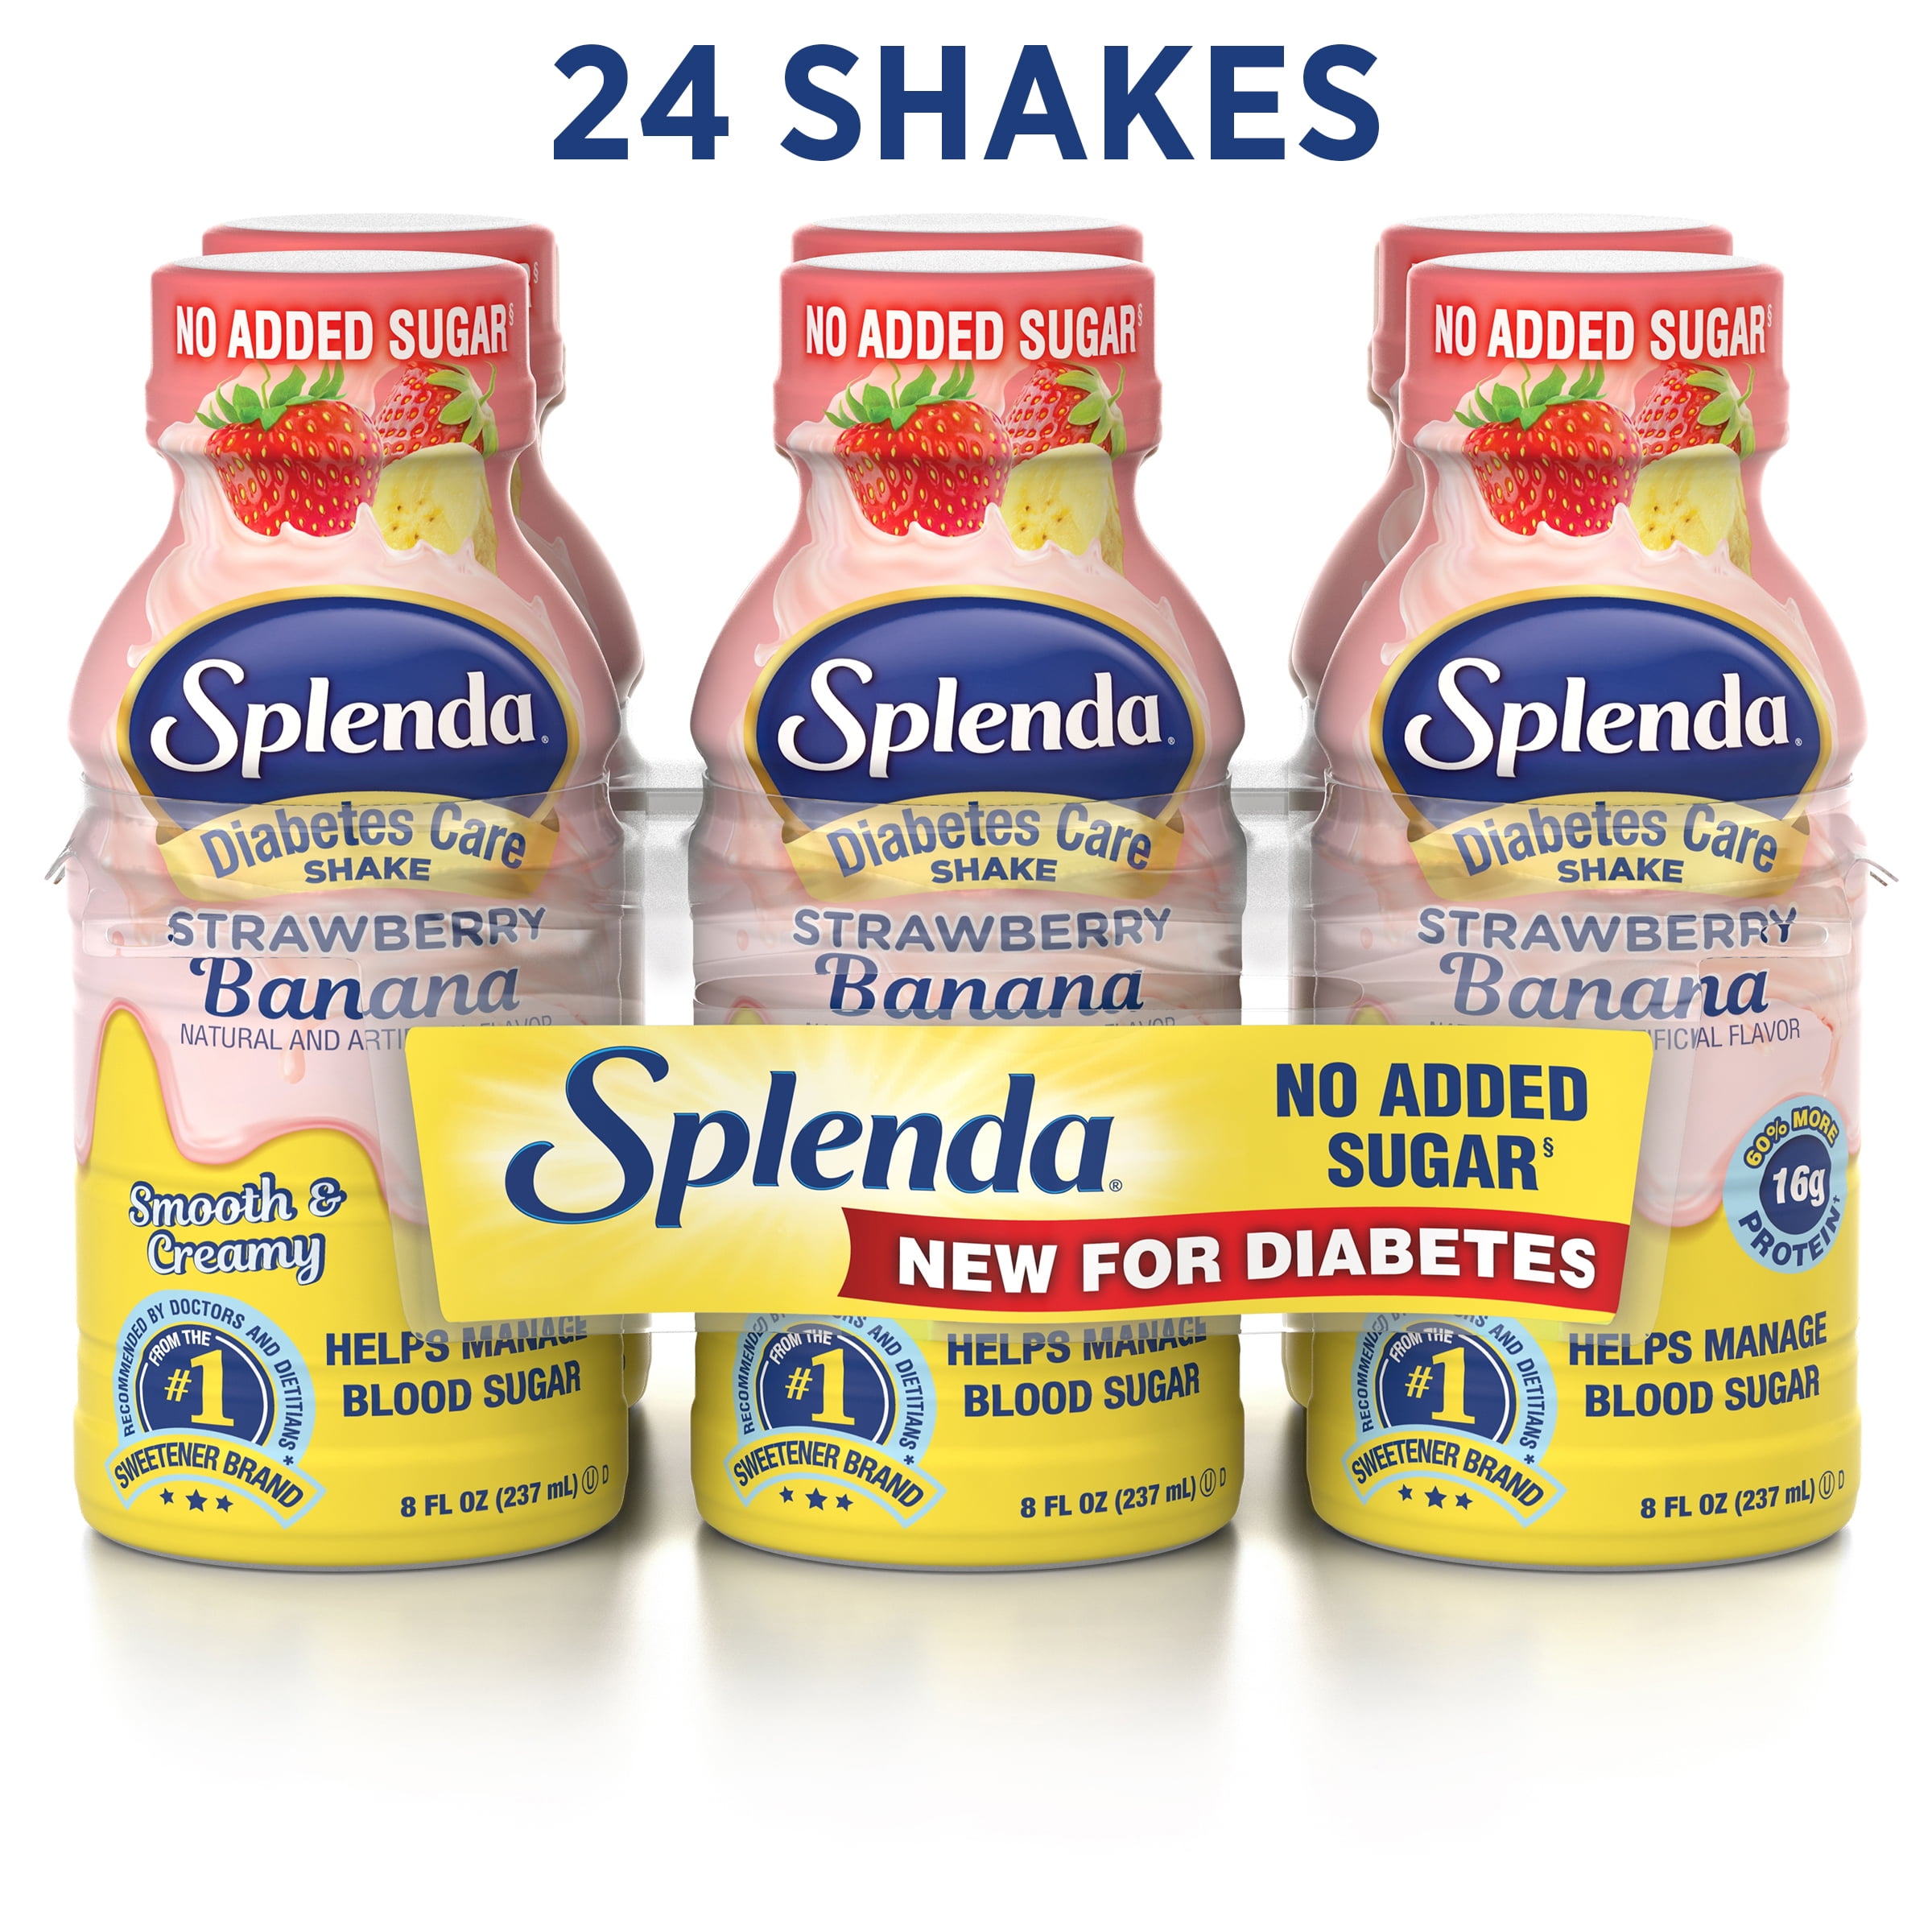 Splenda Diabetes Care Shake, To help manage blood sugar, 8oz Strawberry Banana 24ct